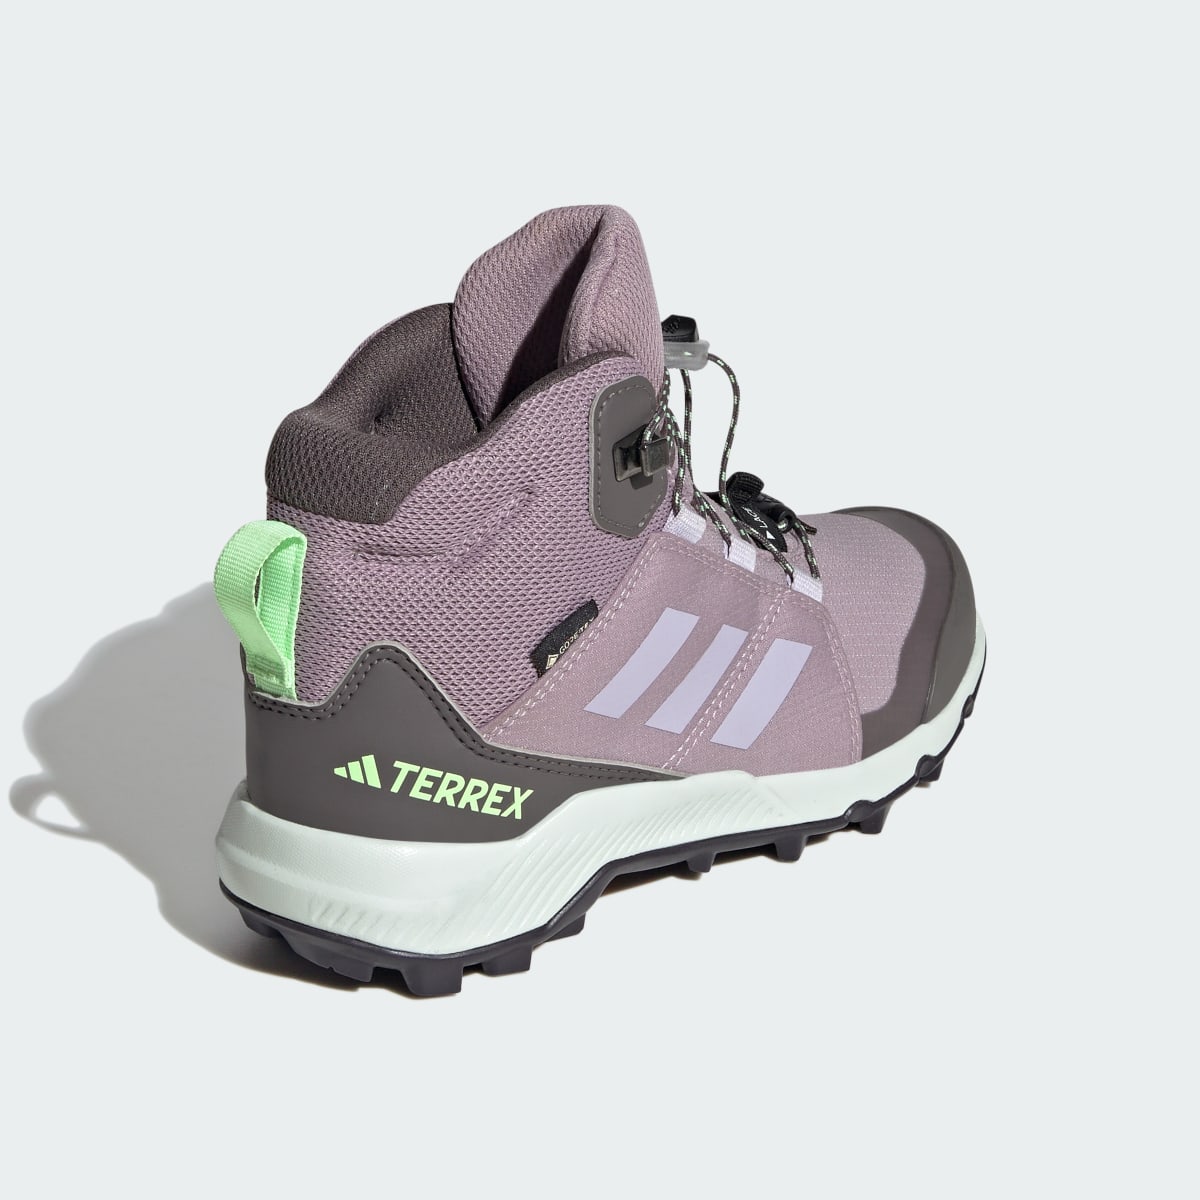 Adidas Terrex Mid GORE-TEX Hiking Shoes. 6